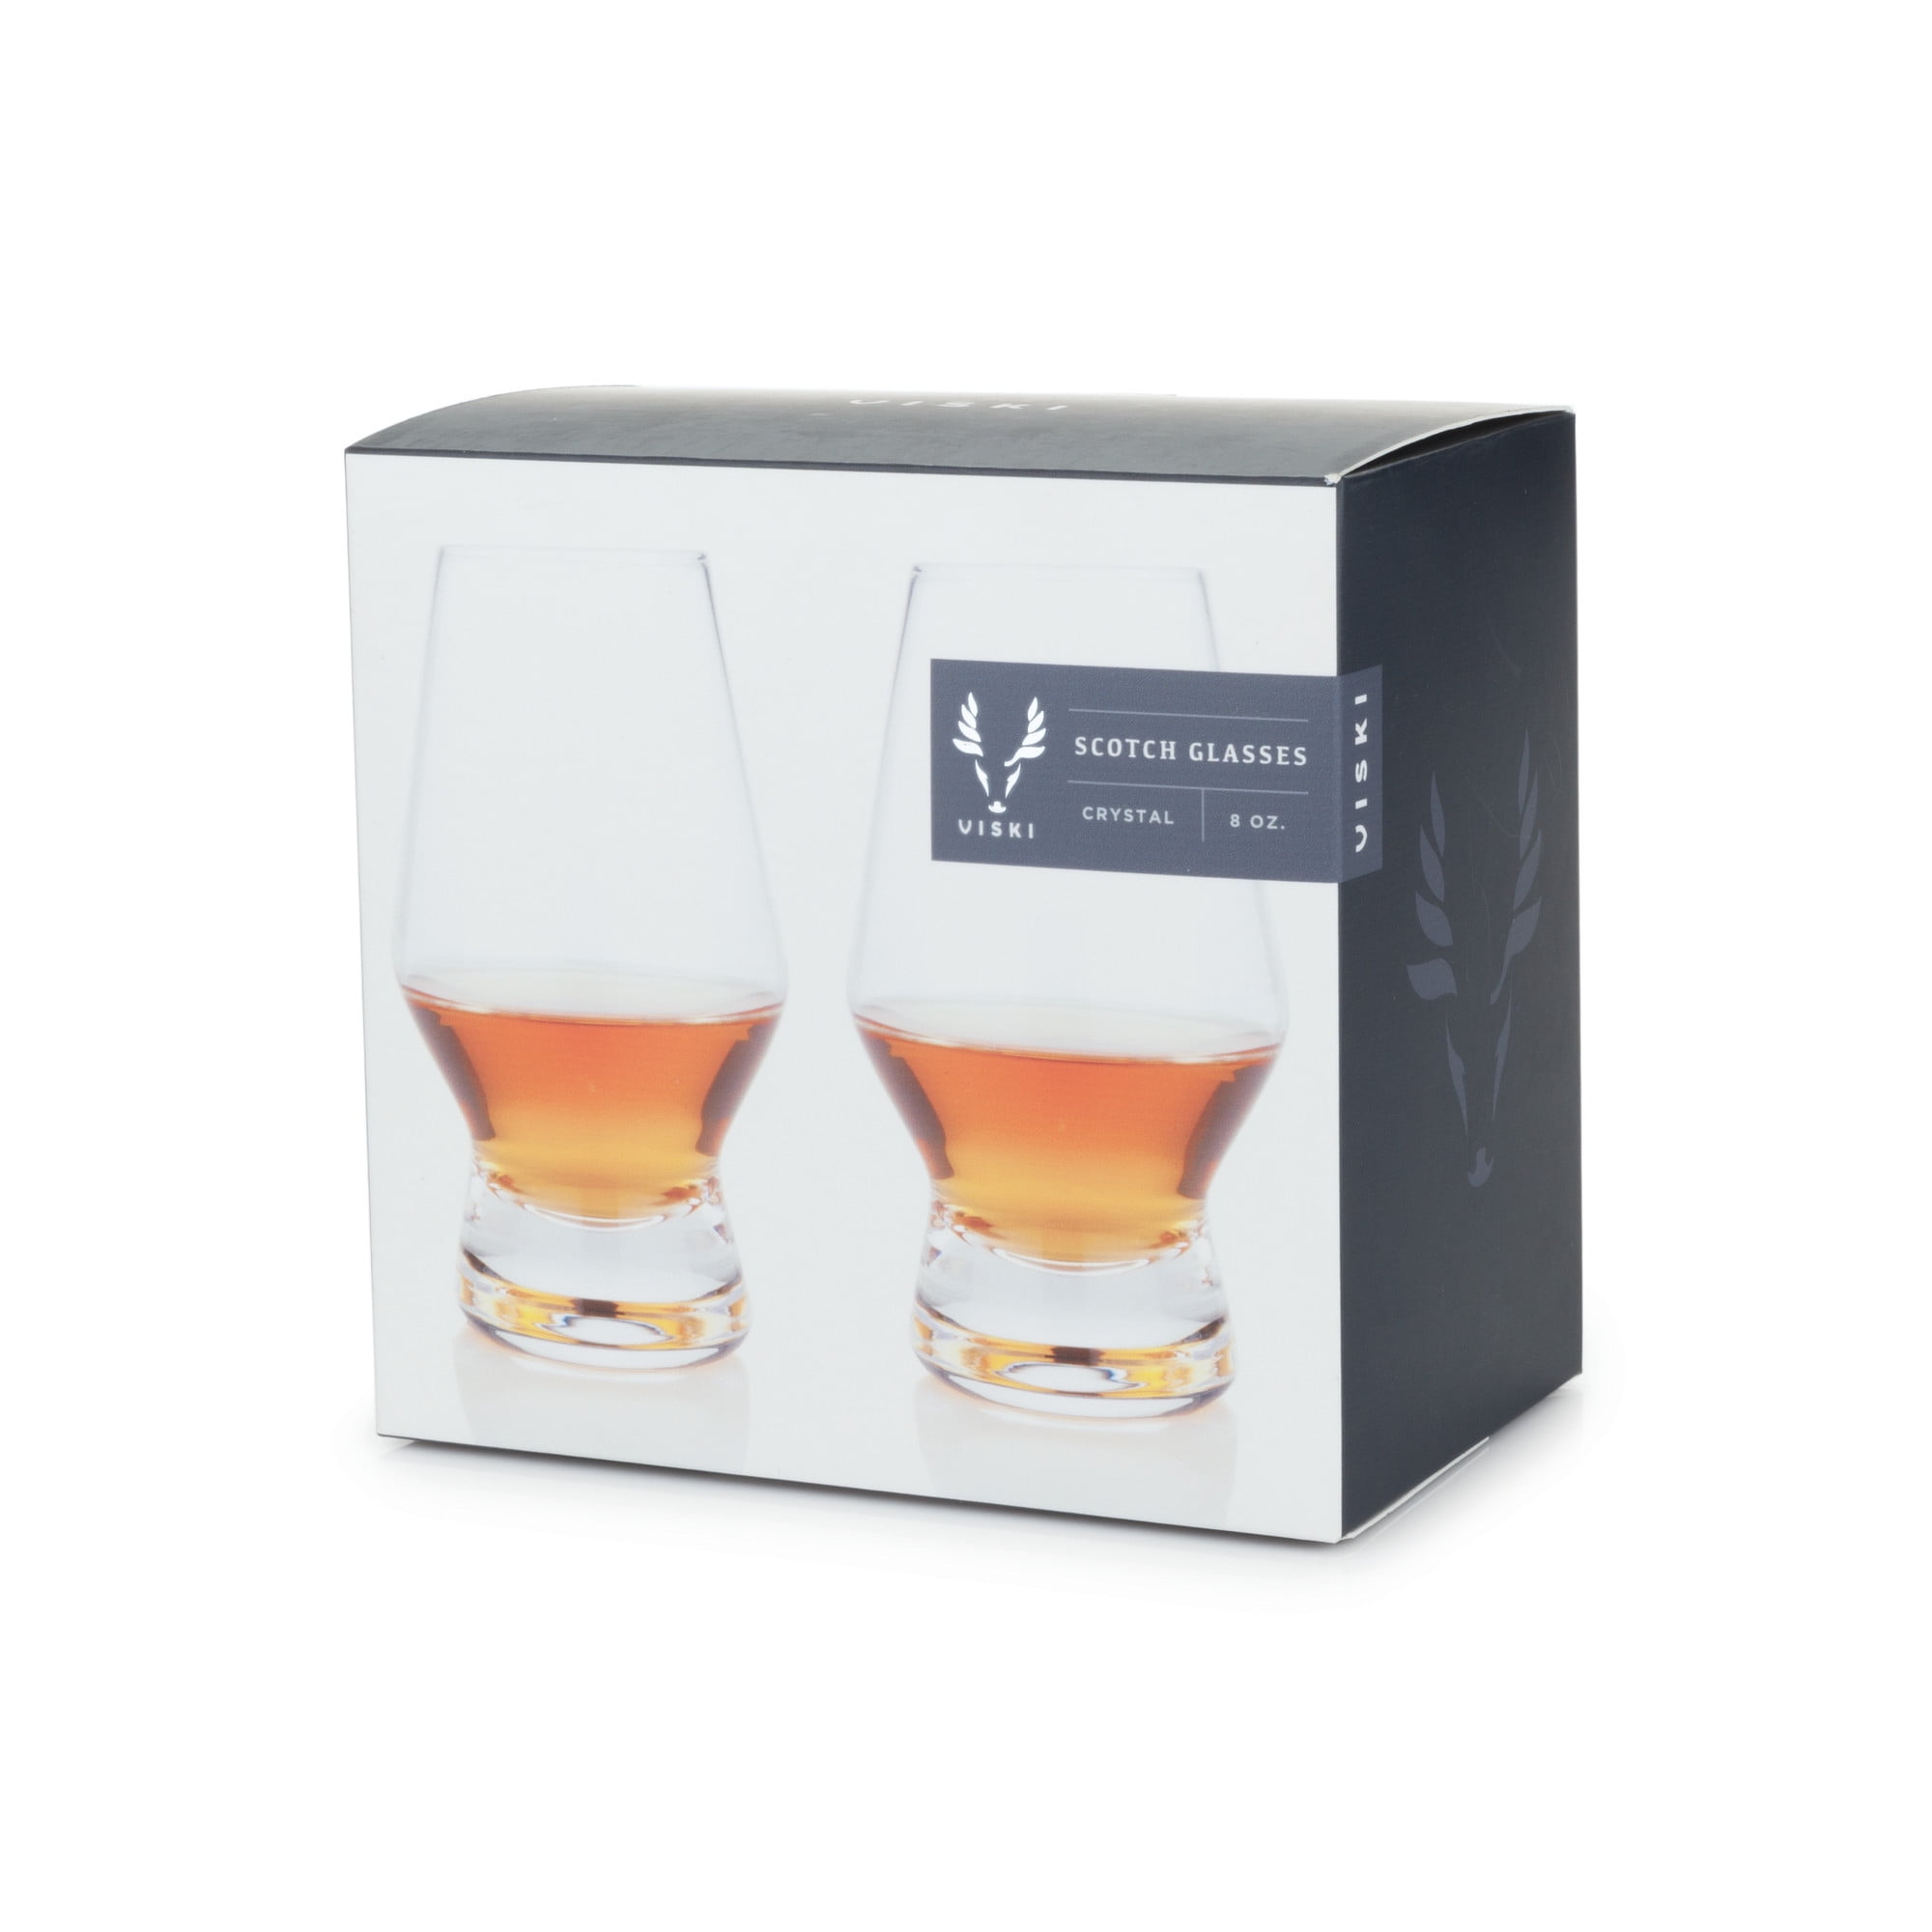 Viski Footed Crystal Scotch Glasses - Classic Whiskey Glasses Gift Set 